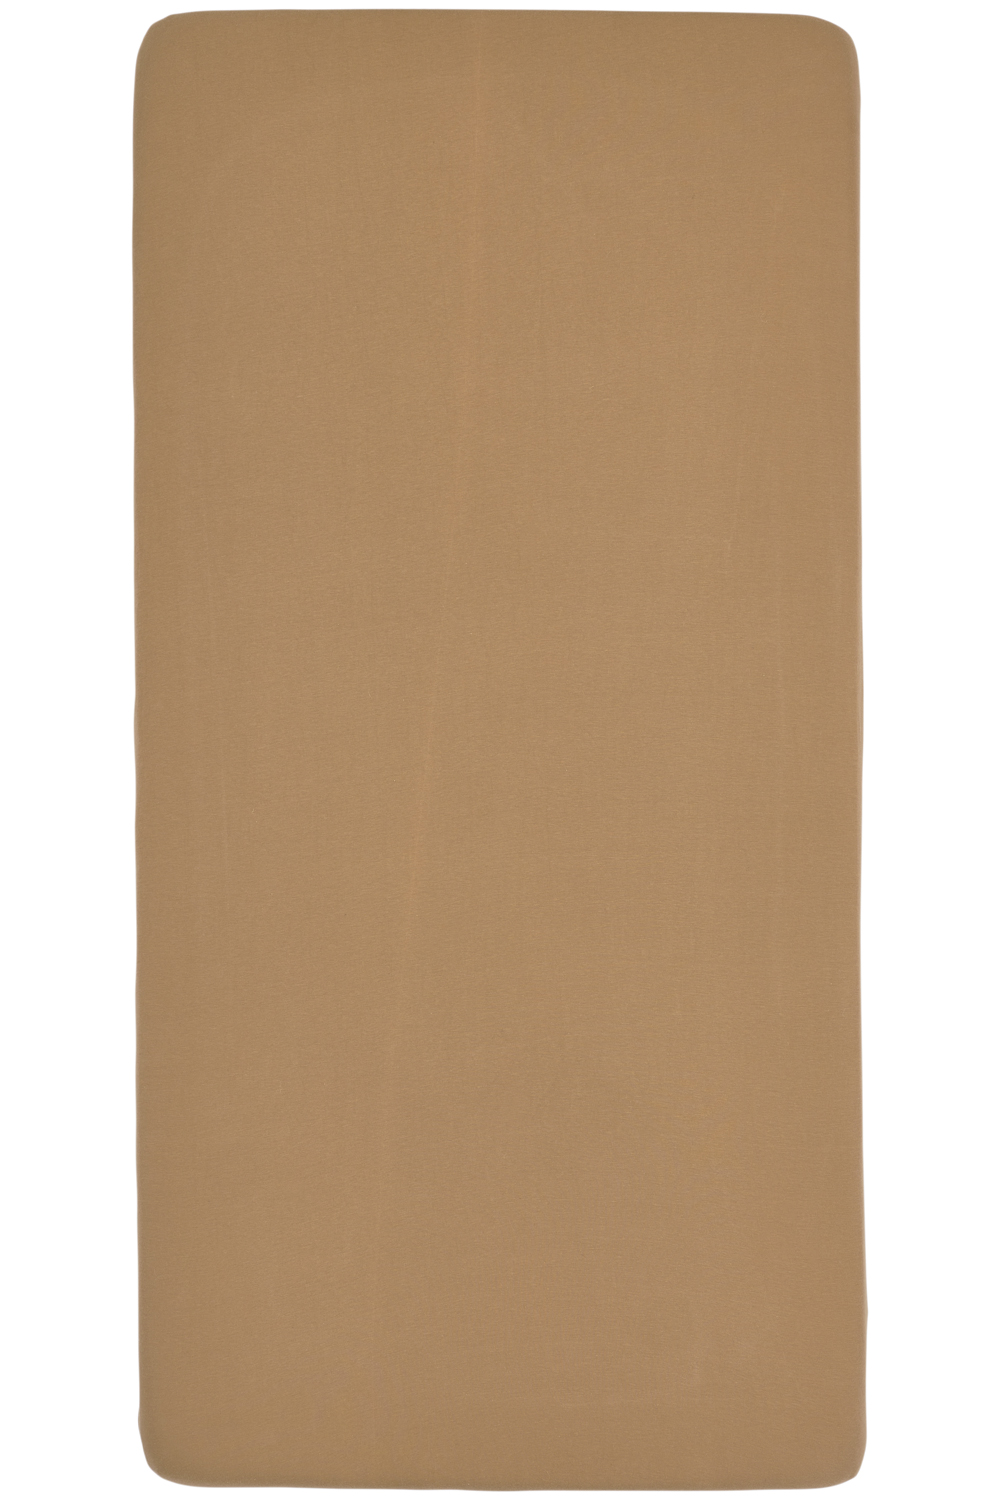 Hoeslaken ledikant Uni - toffee - 60x120cm